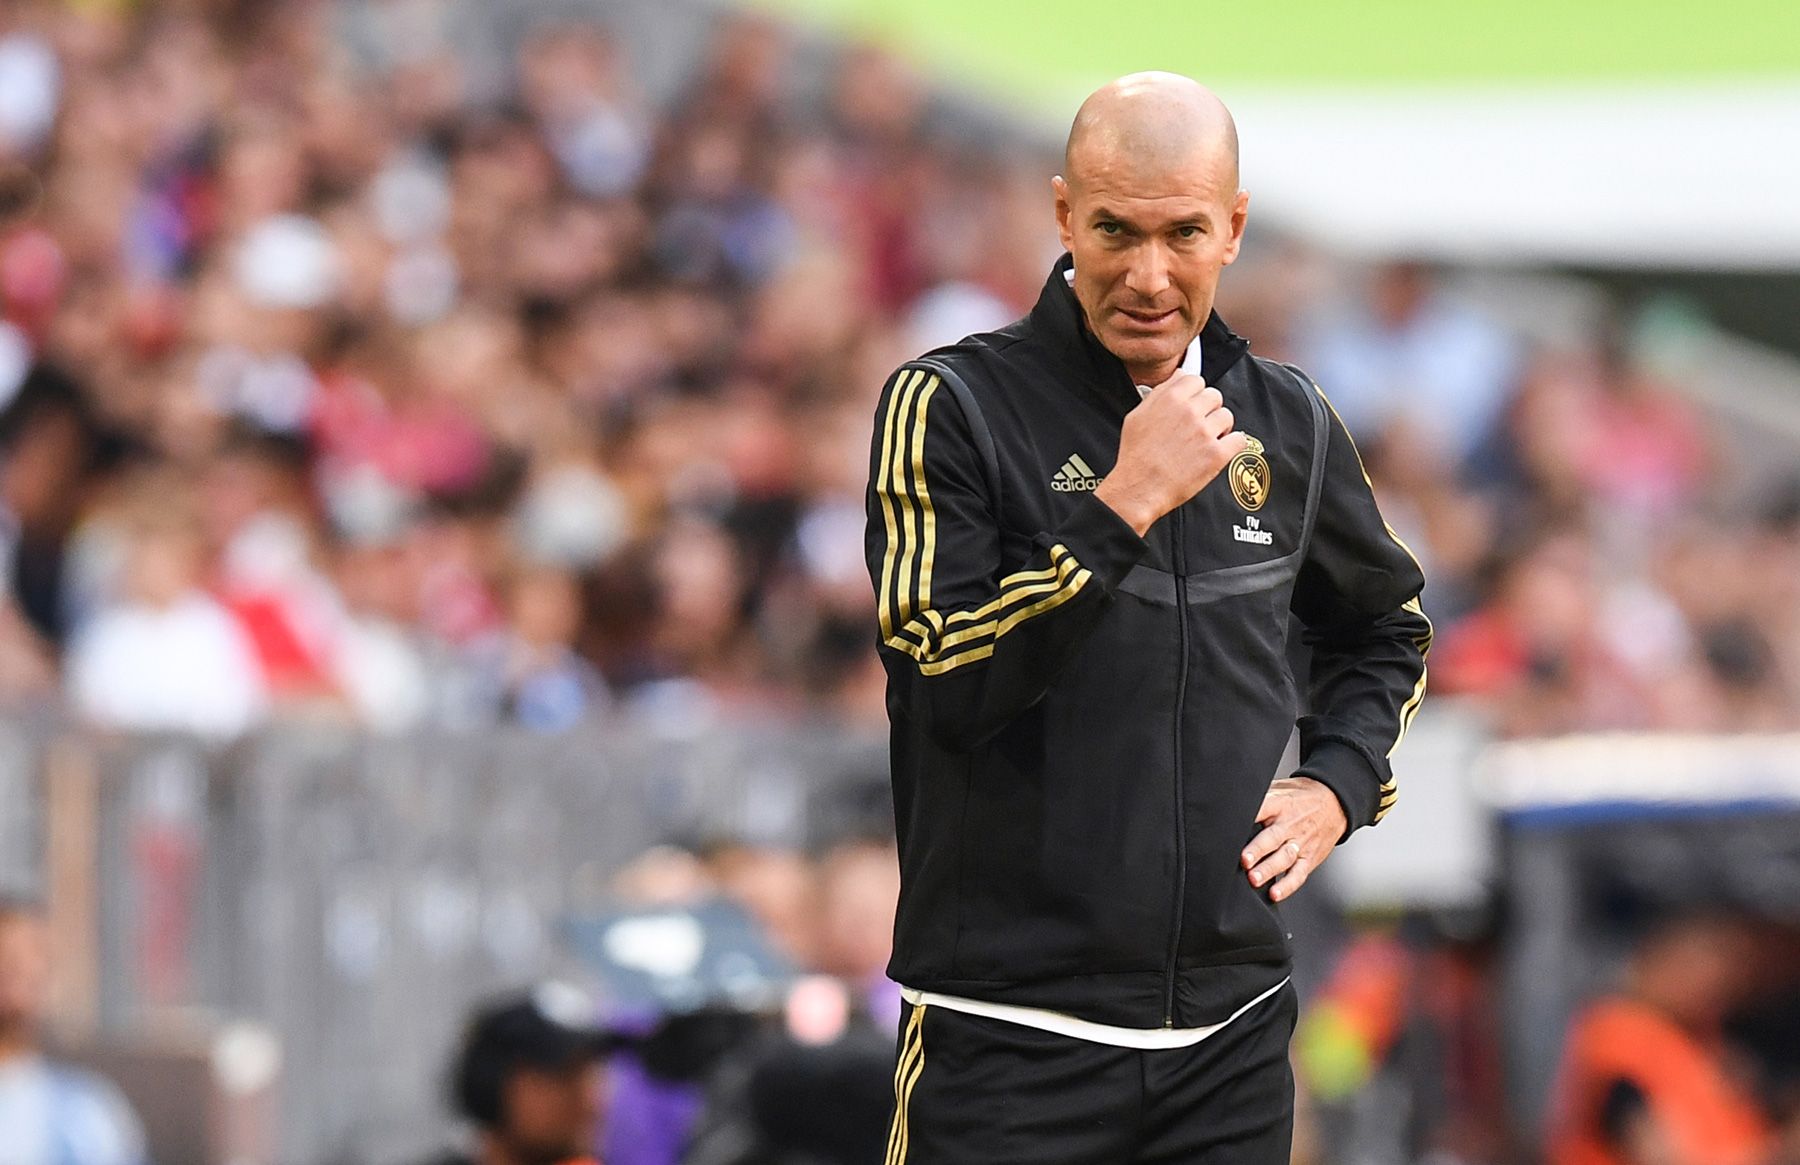 Zidane in the match against Tottenham